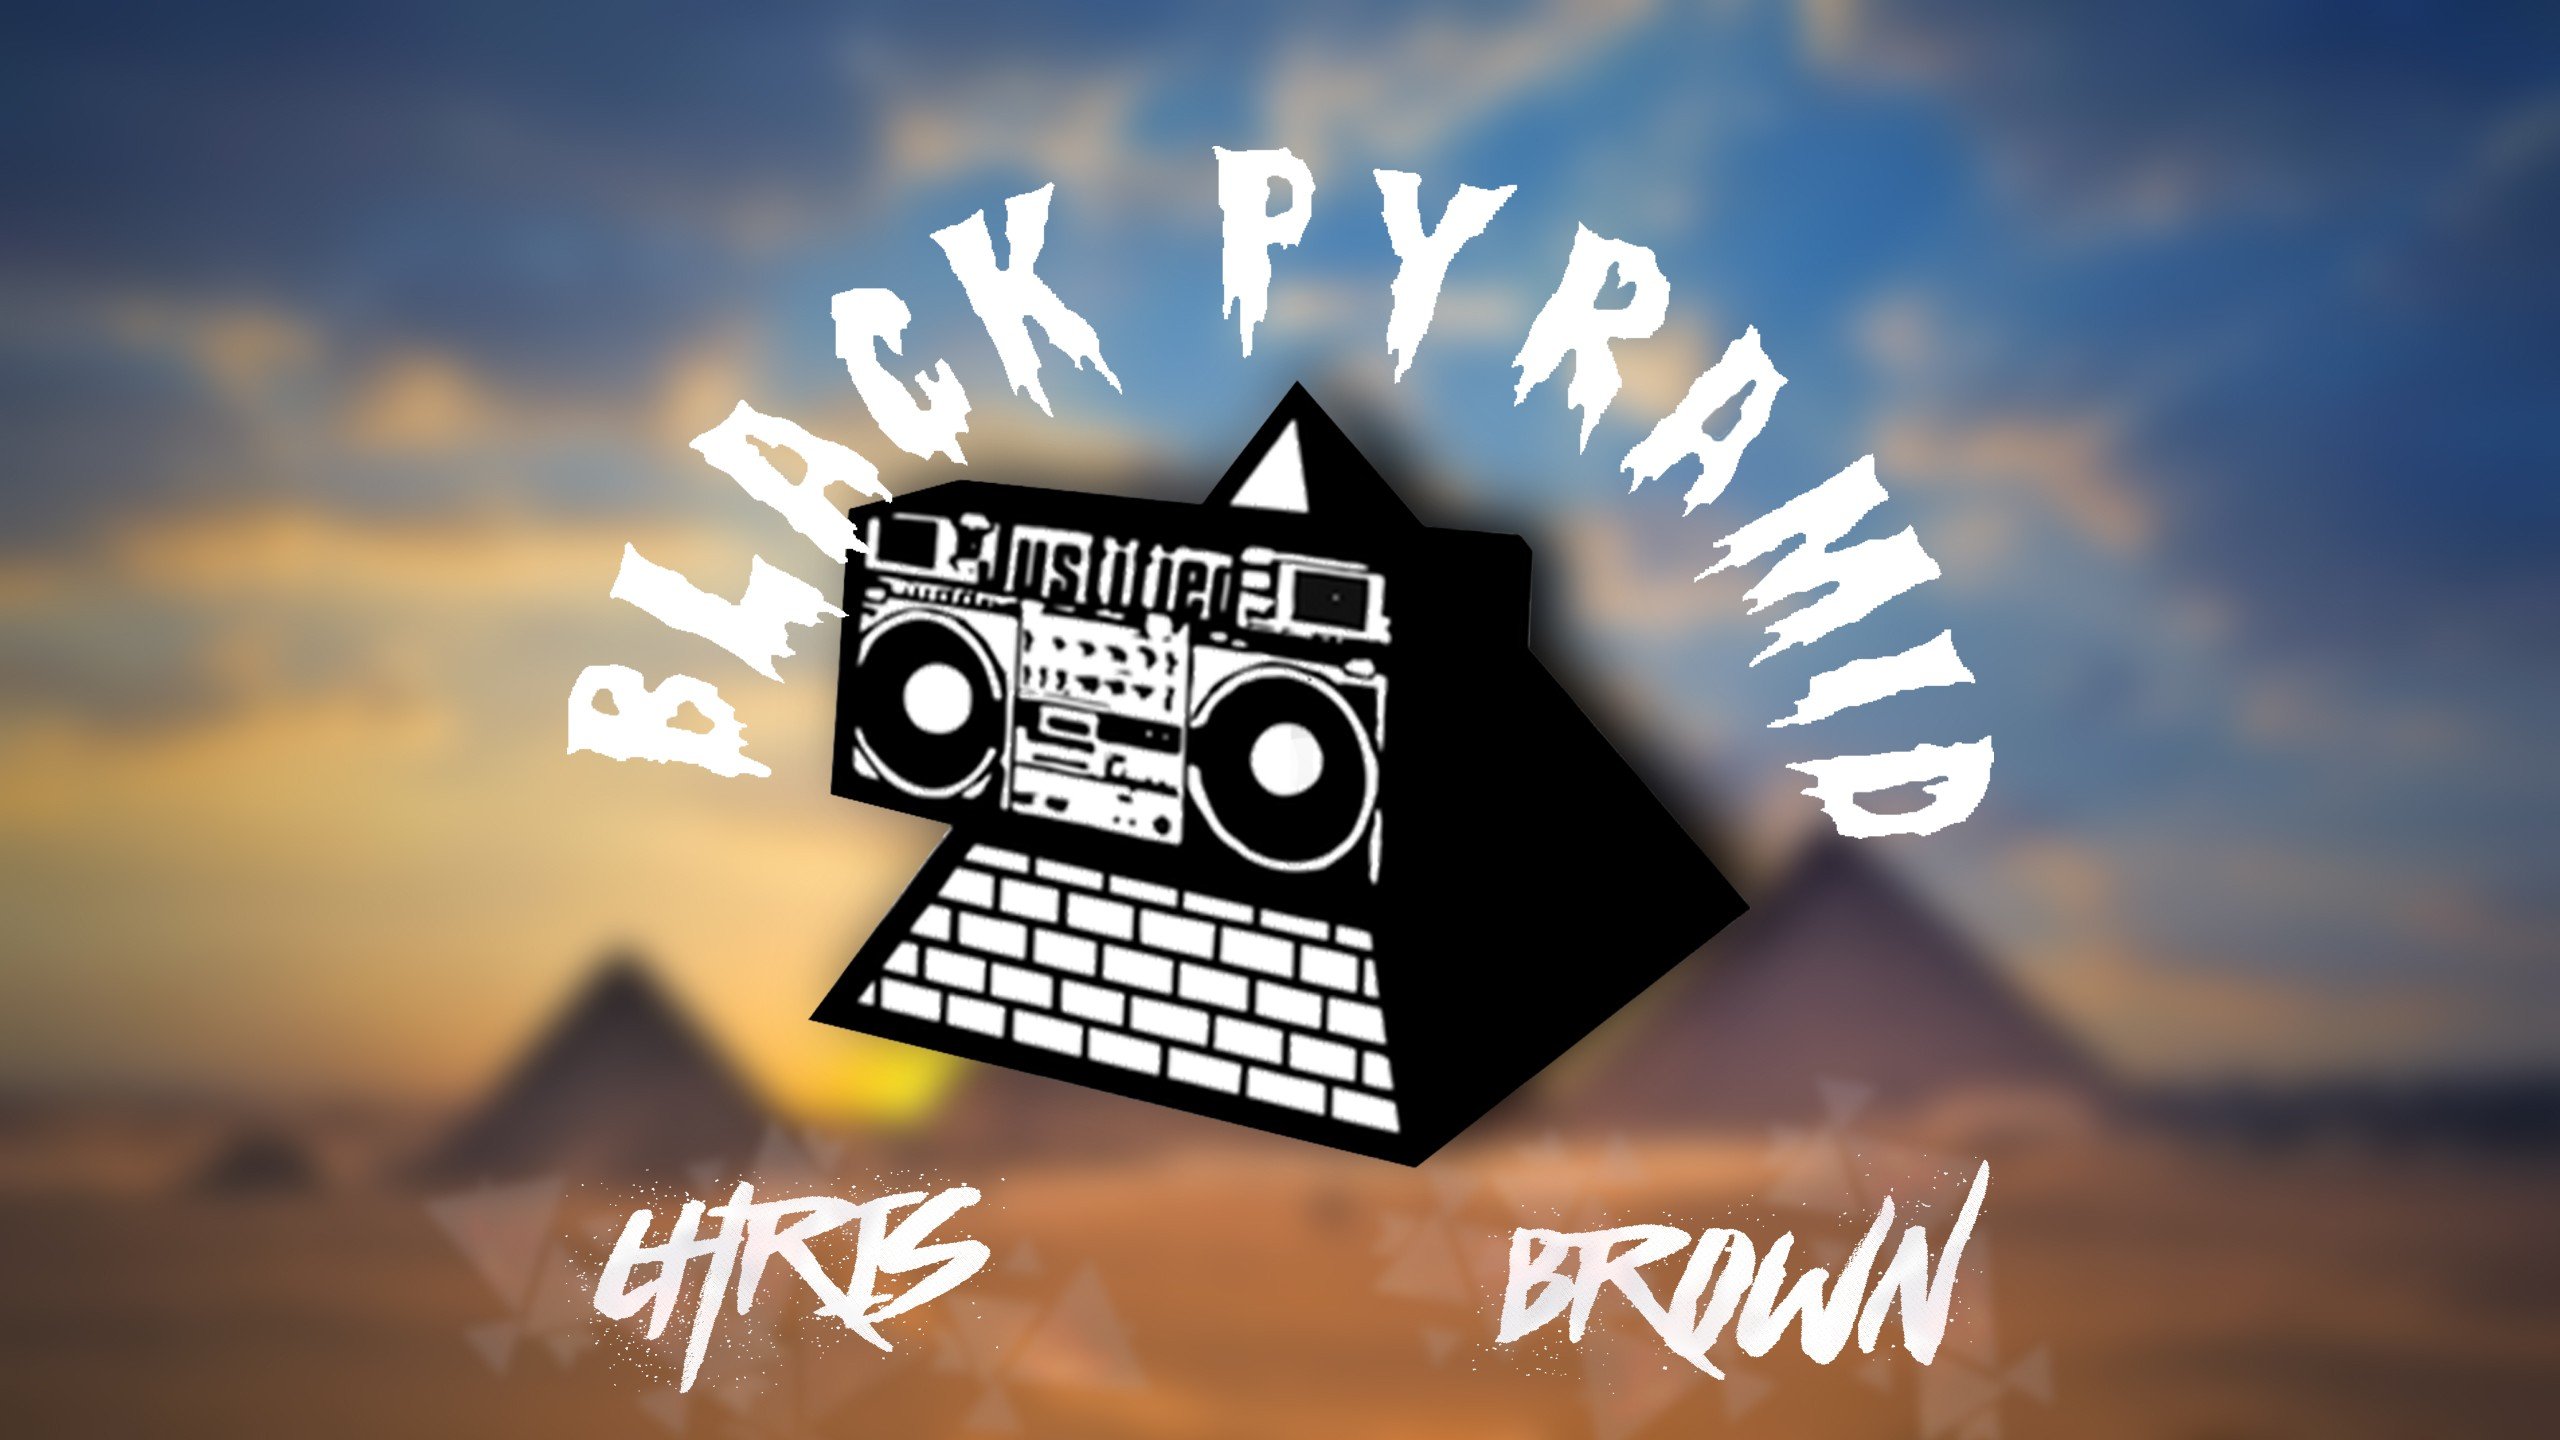 black pyramid wallpaper,font,graphic design,technology,logo,electronics